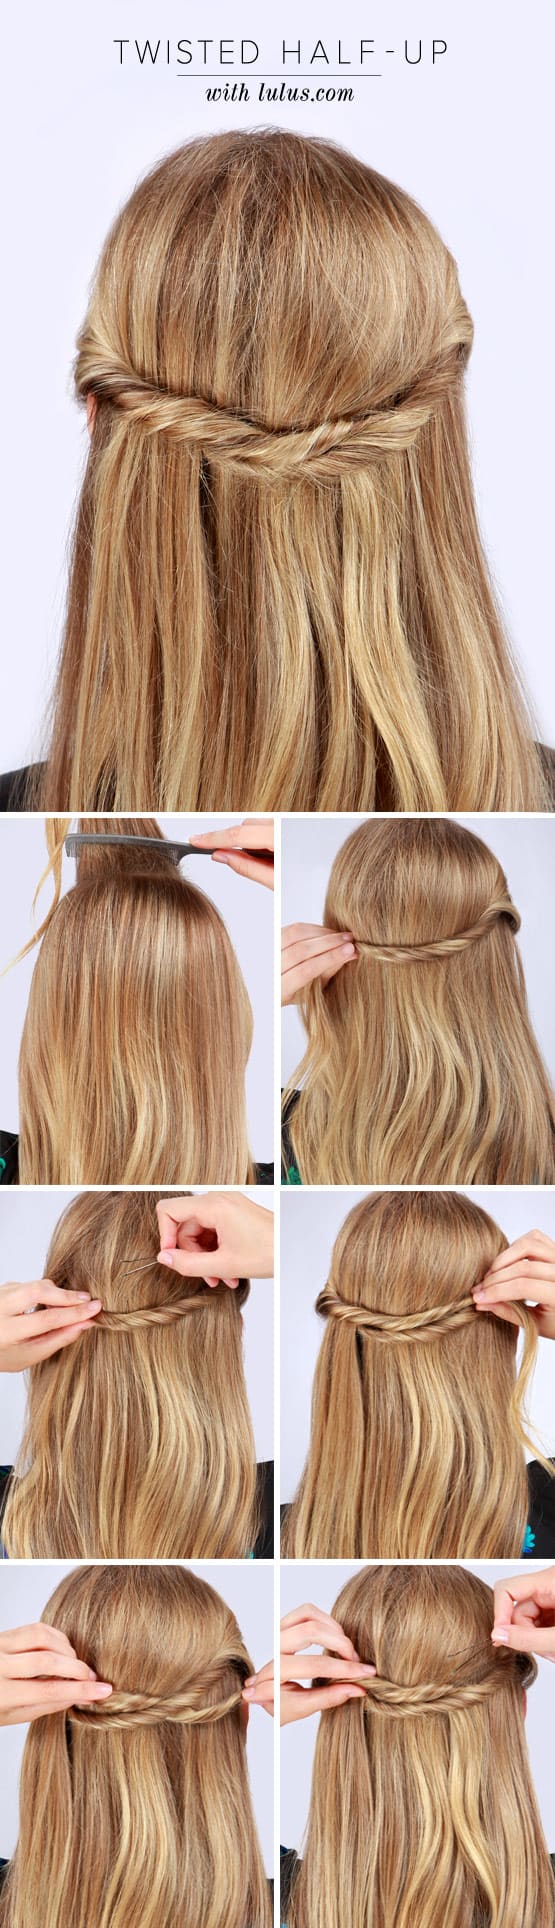 Lulus How-To: Twisted Half-up Hair Tutorial - Lulus.com Fashion Blog